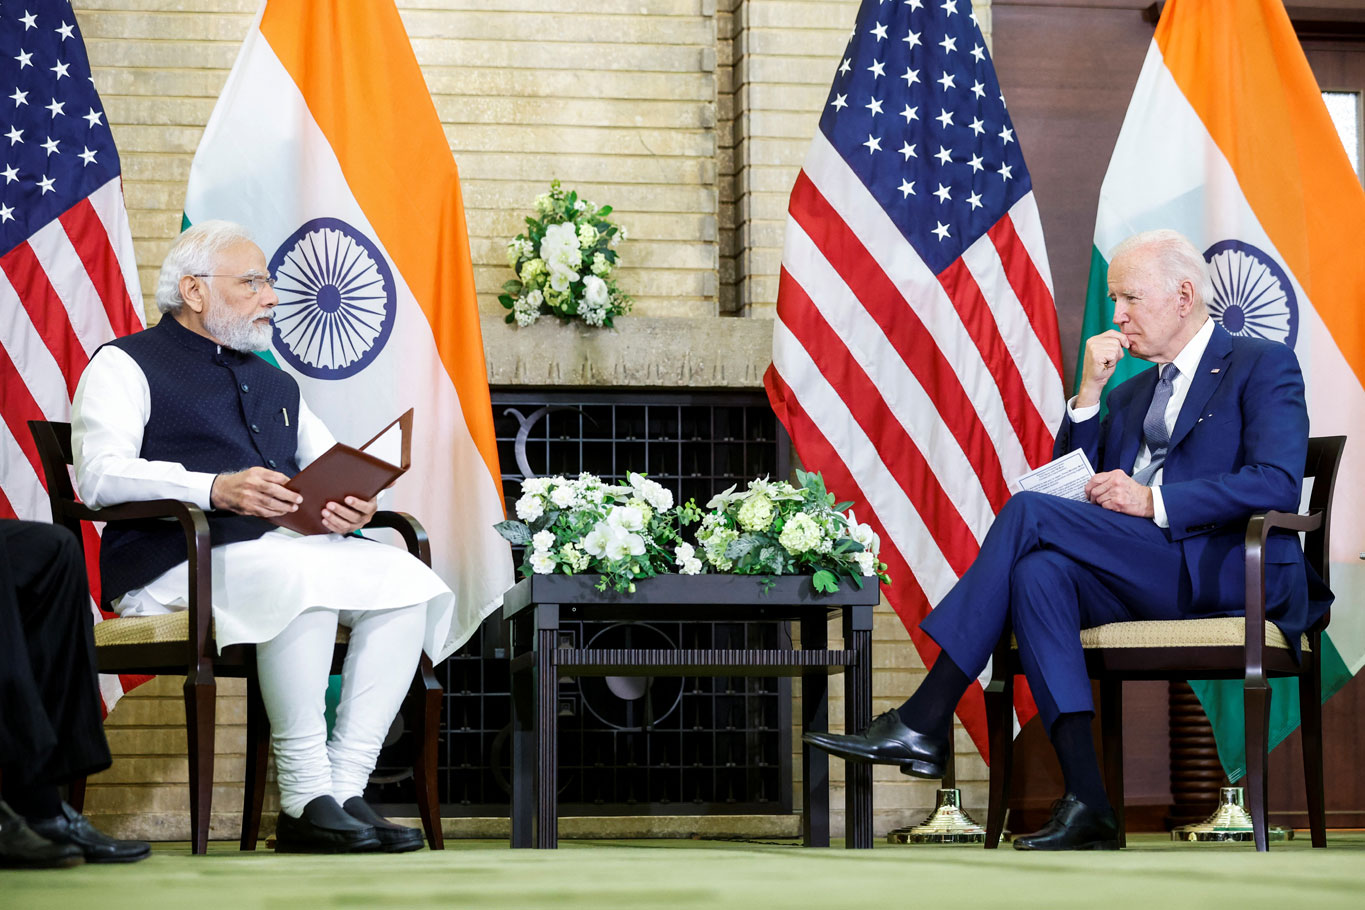 White House Prepares Grand Reception for Modi, Recognizing his Autonomy as Indian Prime Minister